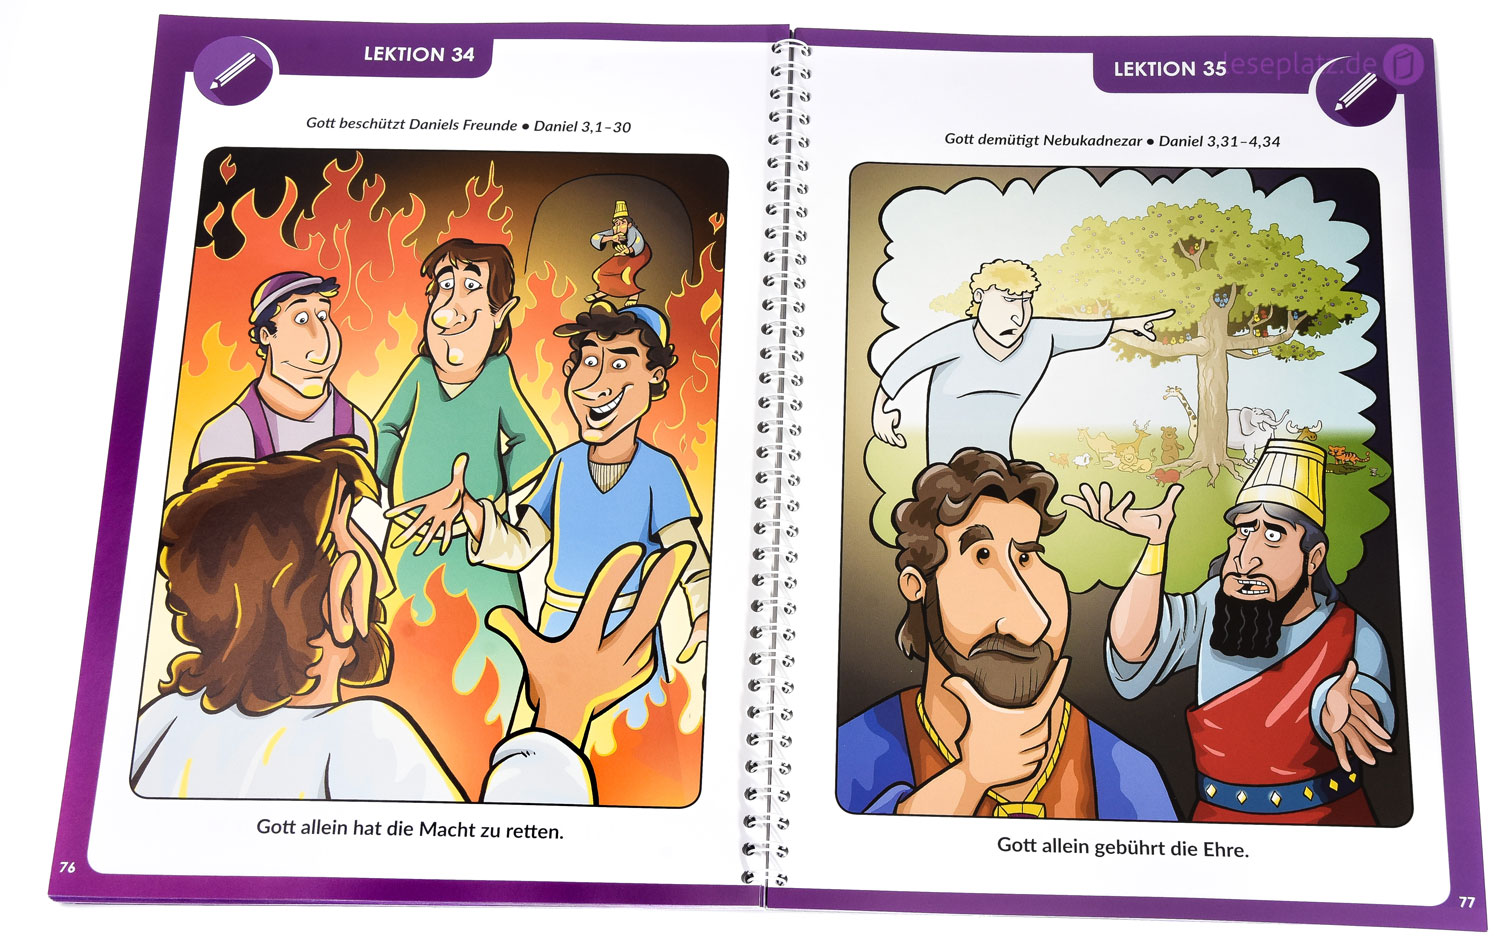 Illustrationsbuch - Jahr 2 - Generationen der Gnade